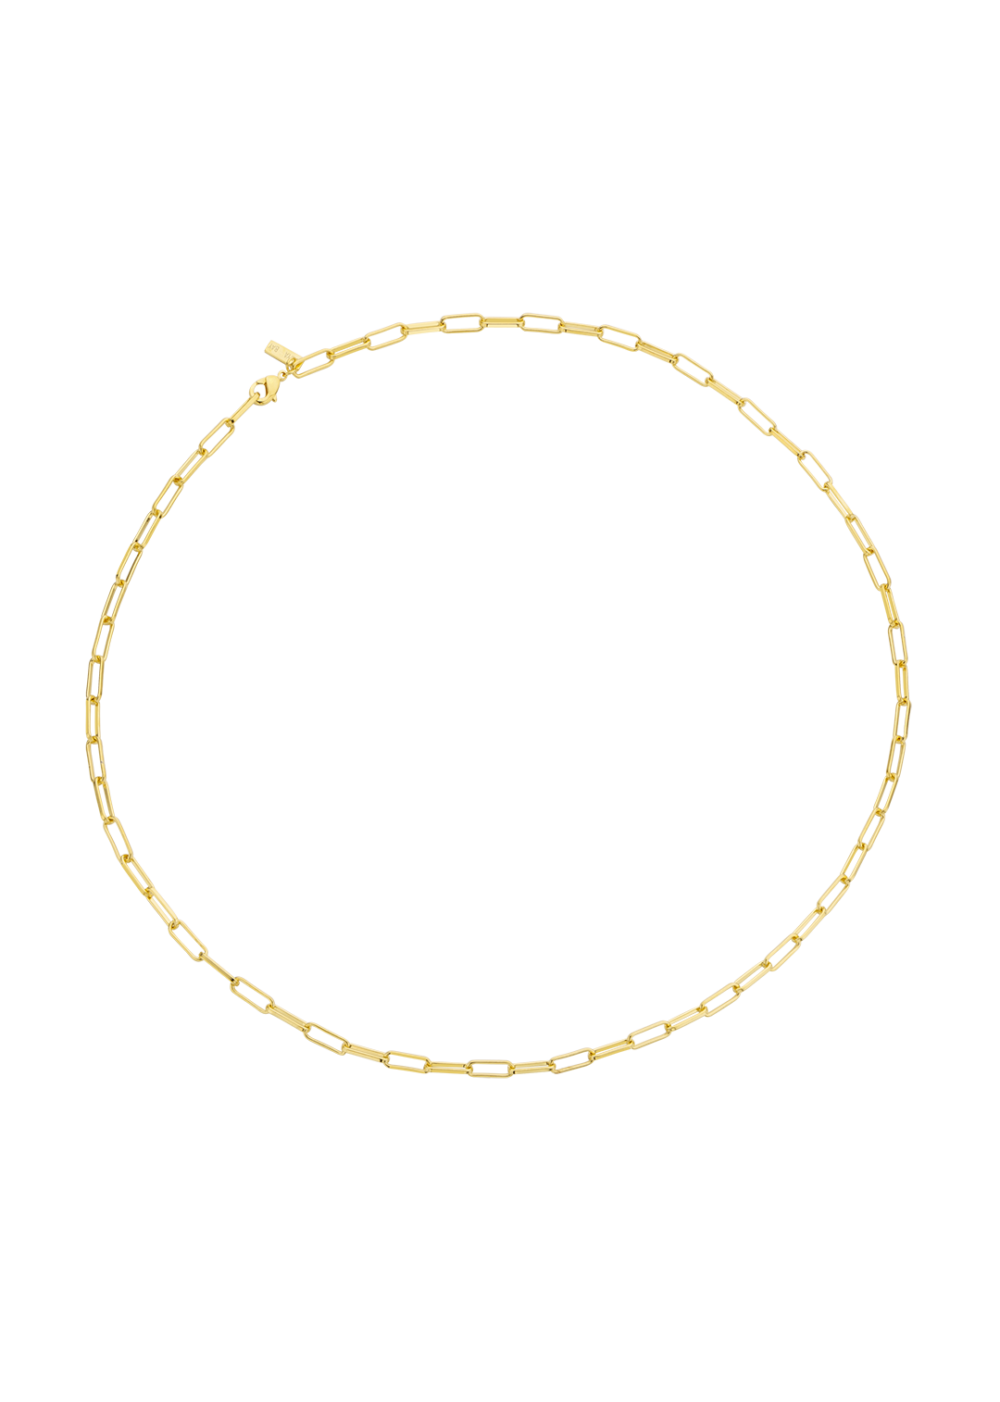 Tendance Ete 2020 Fashion Blog Mode Bijou Jewelry Mya Bay Or Gold Necklace Collier Chain Chaine Maillon